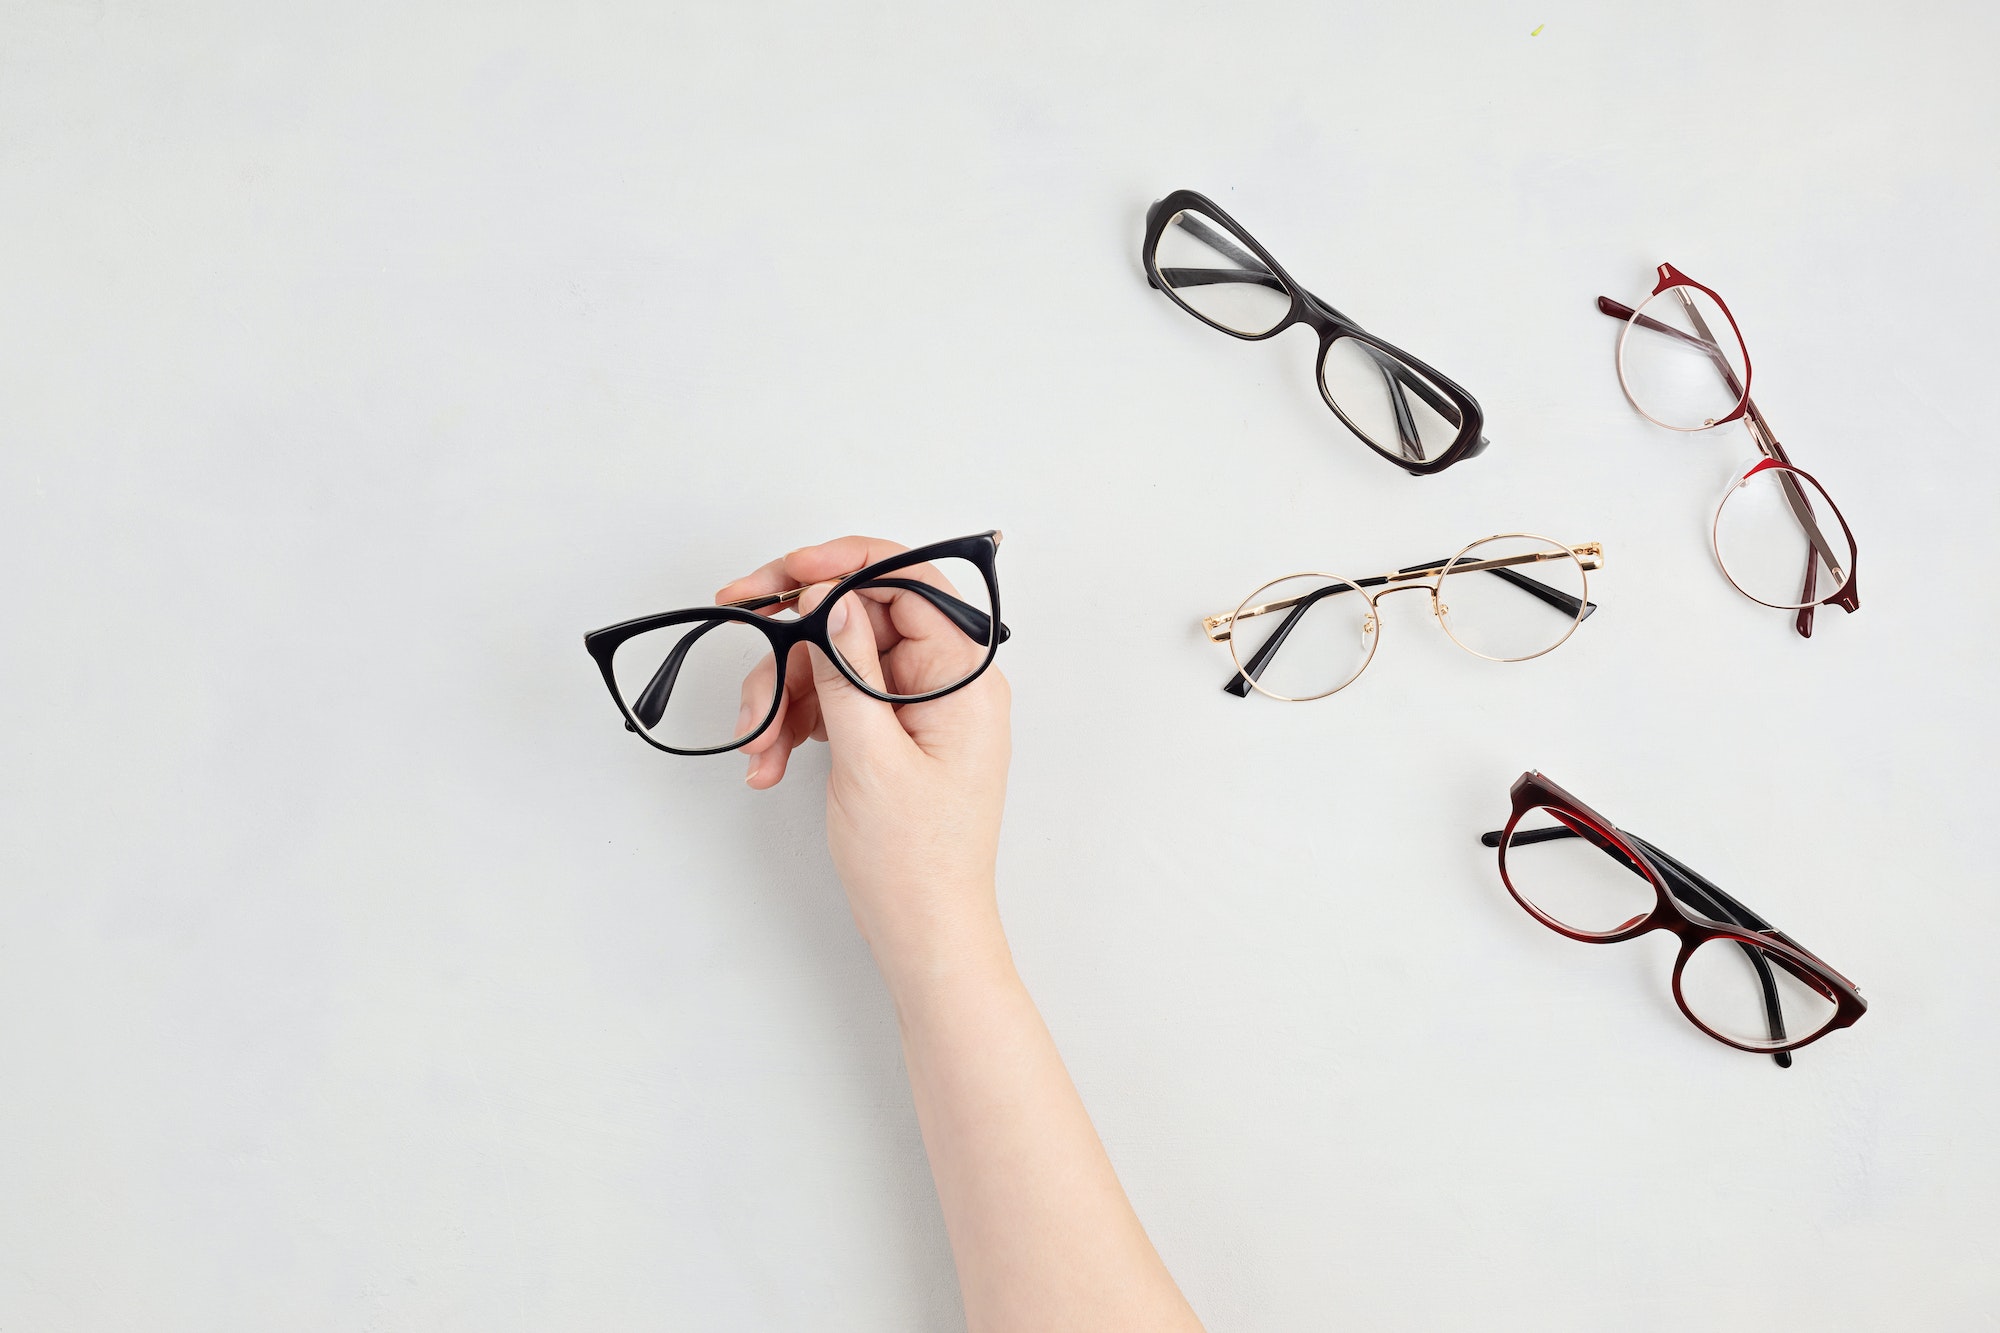 Woman hand holding eyeglasses. Optical store, glasses selection, eye test, vision examination at